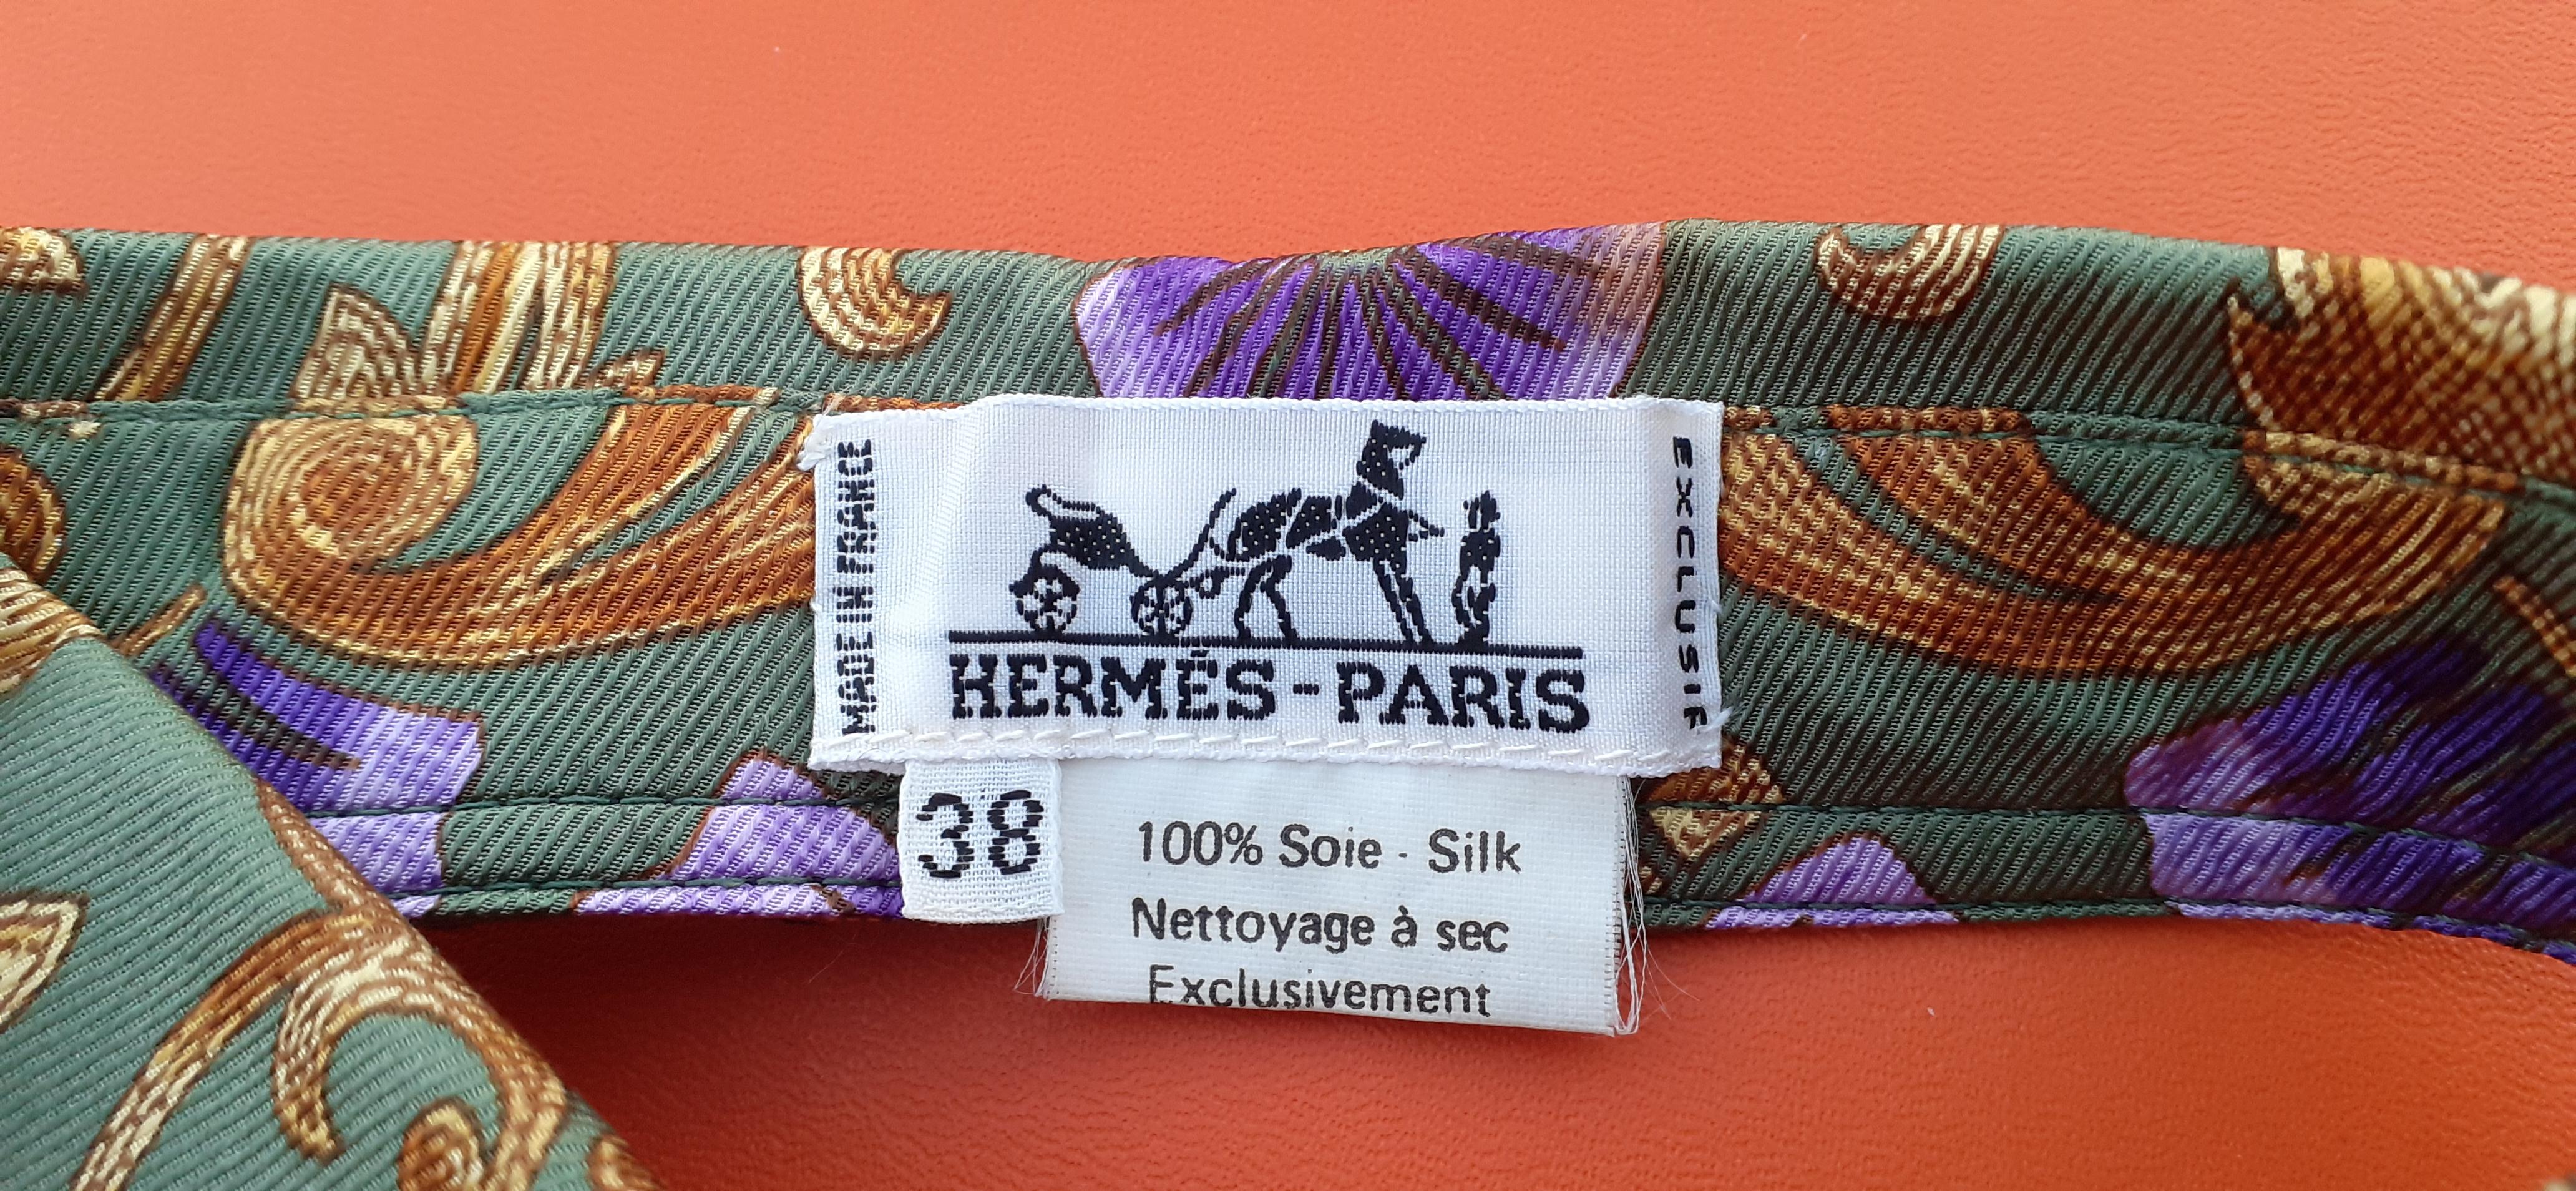 Amazing and Rare Authentic Hermès Set of matching collar and cuffs

D'après l'imprimé 